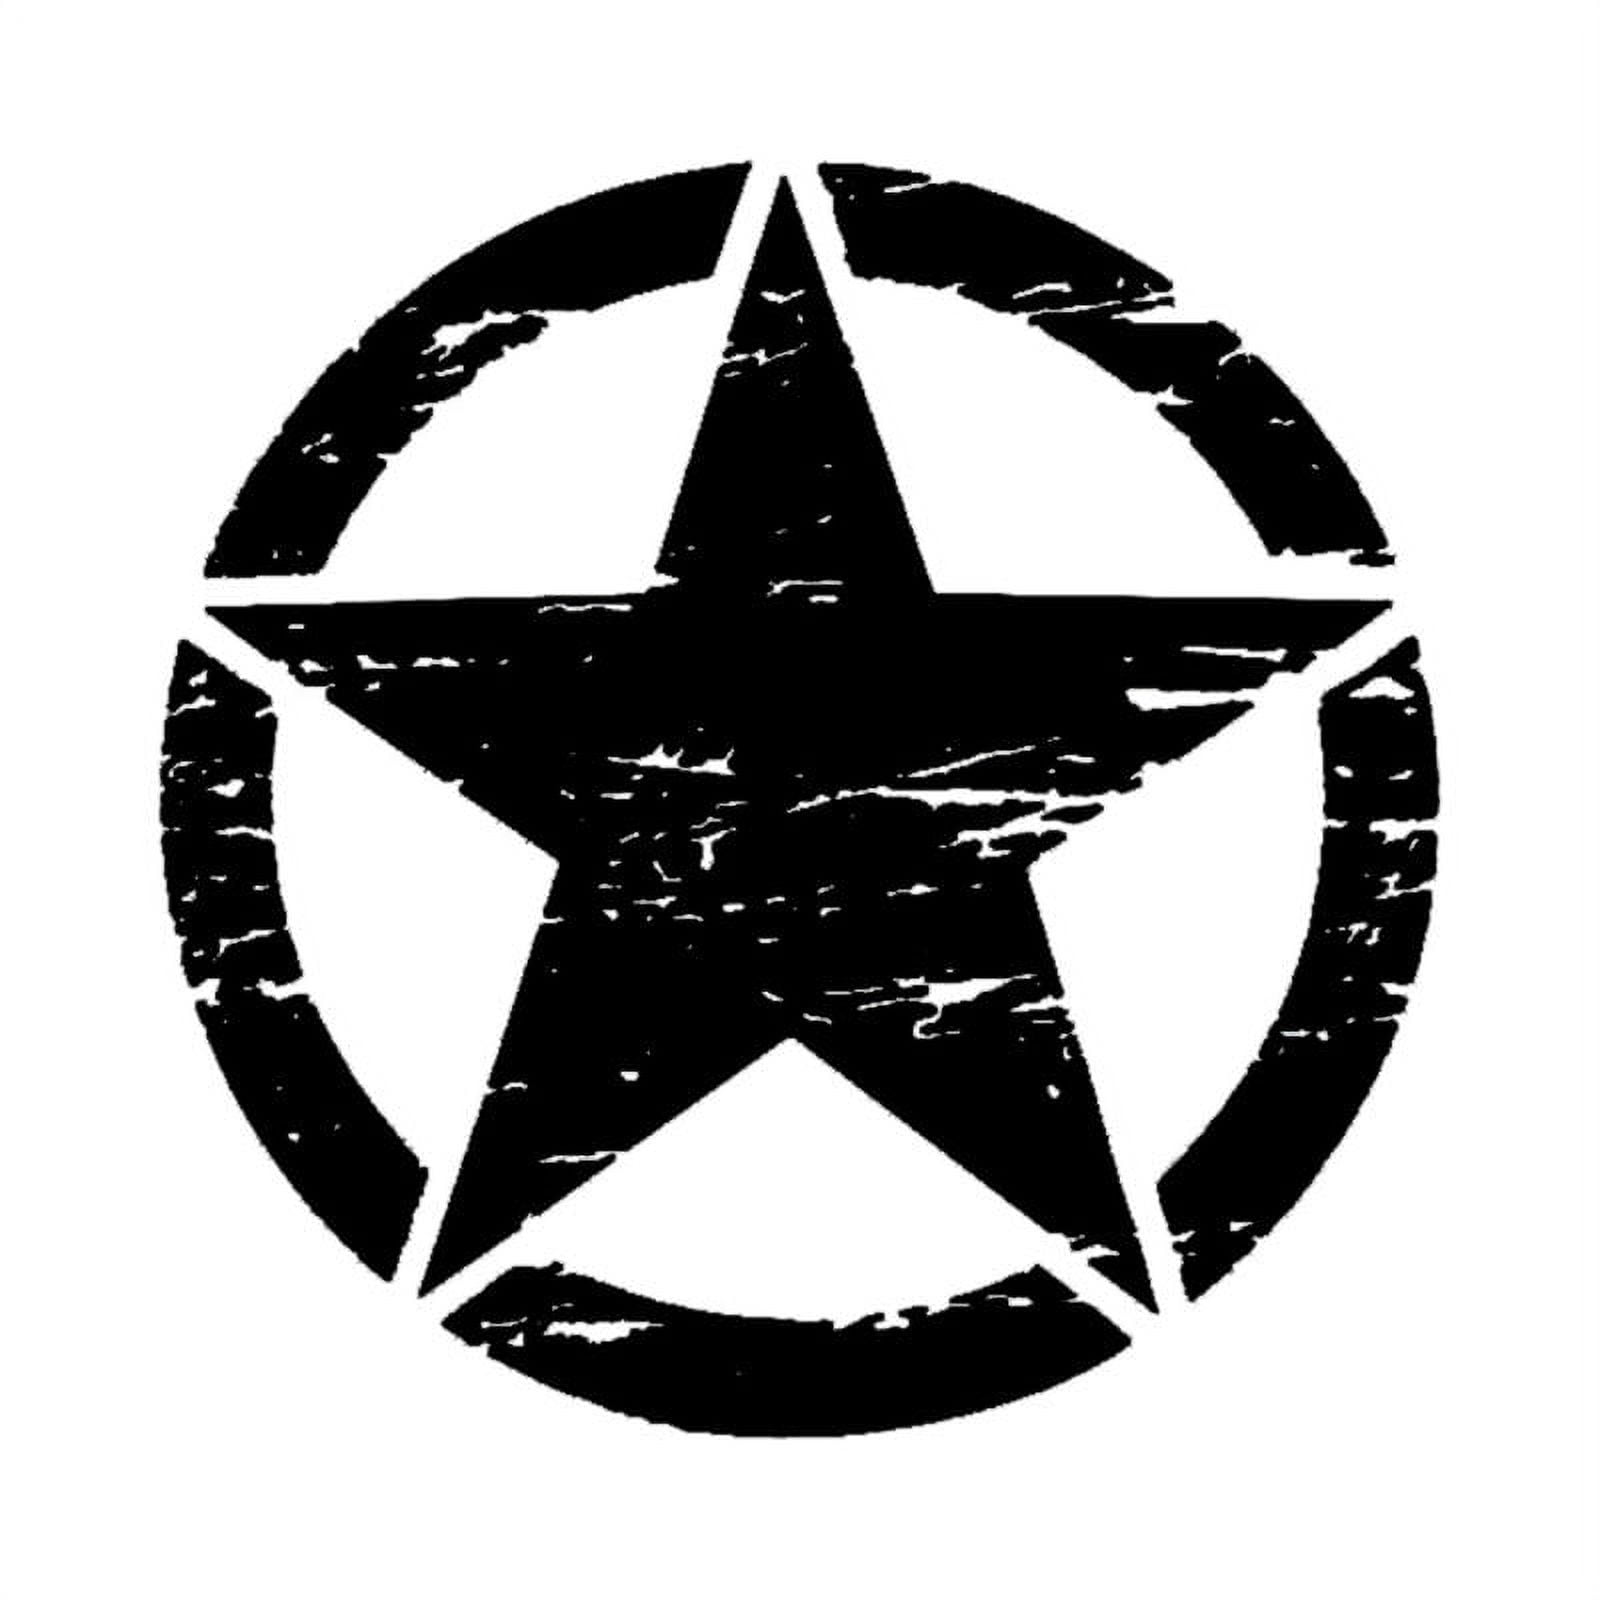 ❤ALTO CAR STICKER❤ 🔥HOOD BLACK MATTE - Muthusara Sticker